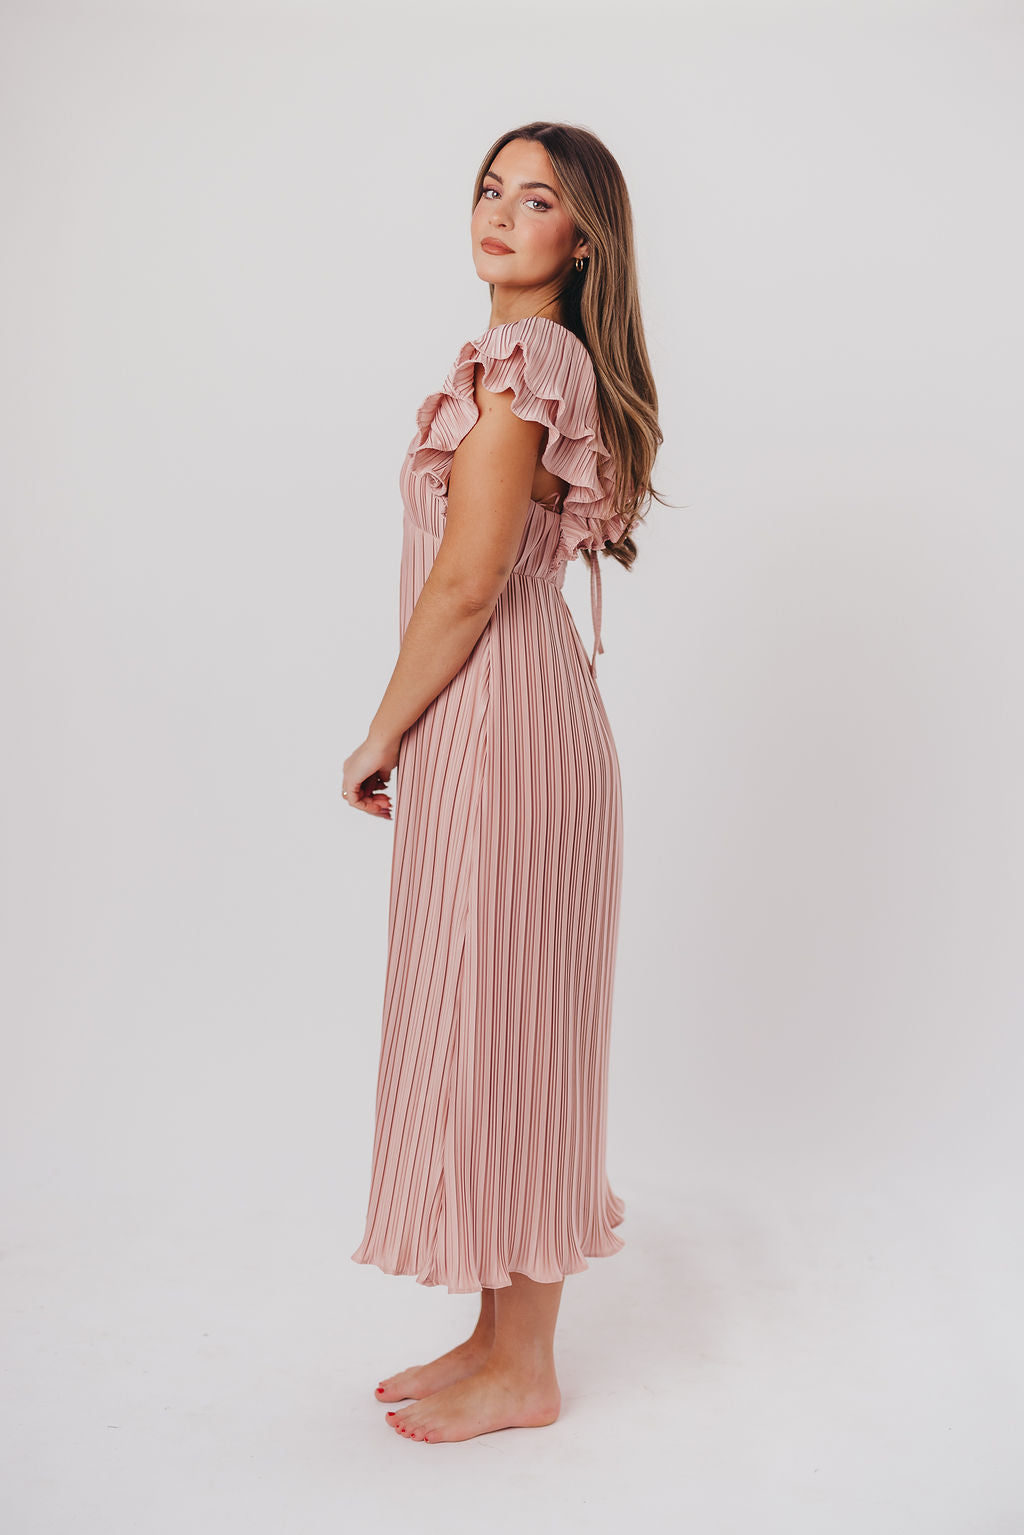 Lucky Charm Midi Dress in Tea Rose - Bump Friendly & Inclusive Sizing (S-3XL)